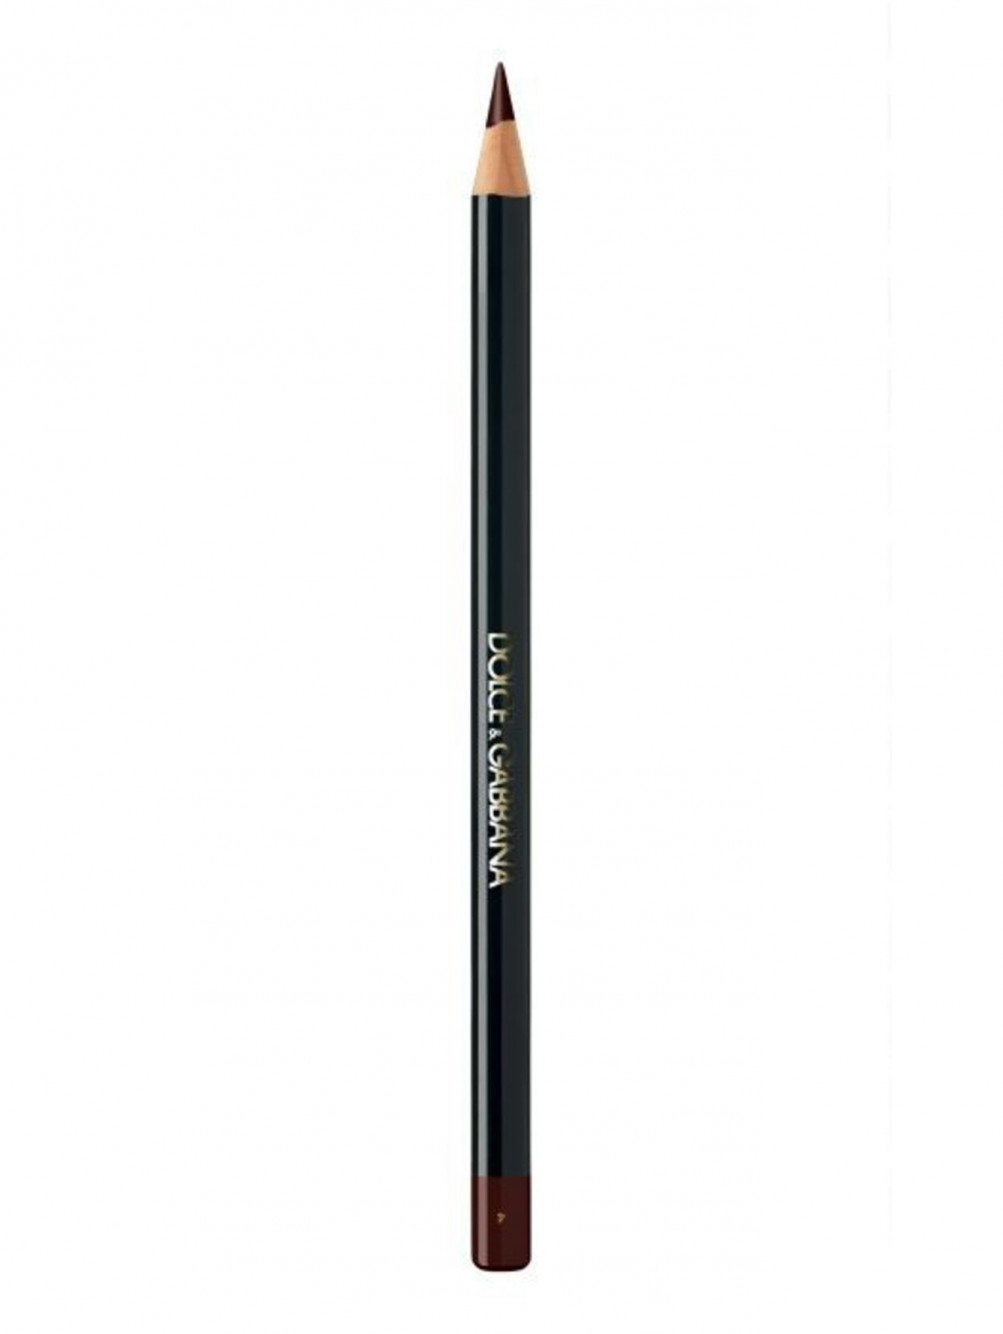 Карандаш-кайал для глаз The Khol Pencil, 4 Chocolate, 2 г - Общий вид